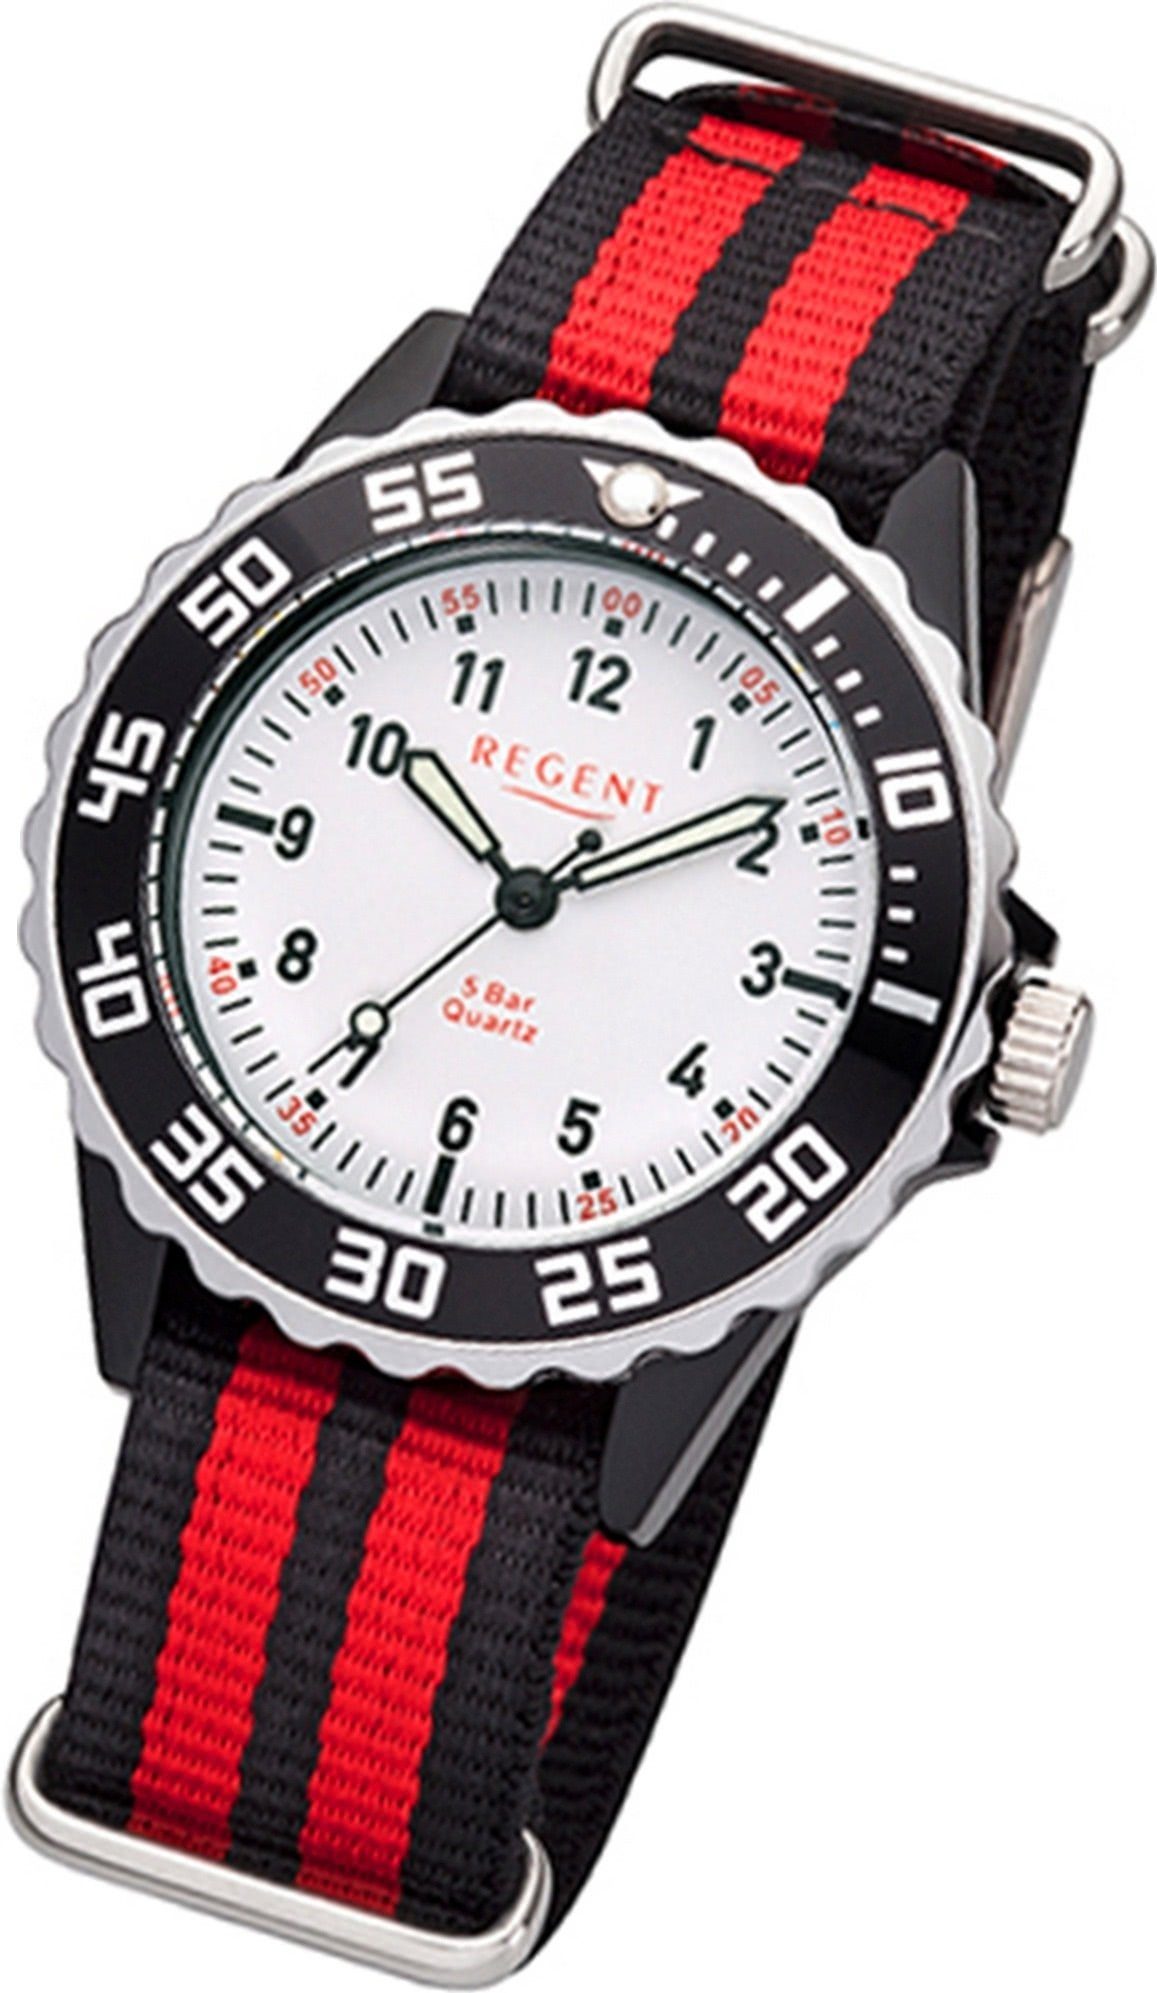 schwarz, Uhr Kinderuhr rot, (35mm) rundes F-1205, Regent Kinder-Jugend Quarzuhr mittel Regent Gehäuse, Textilarmband Textil